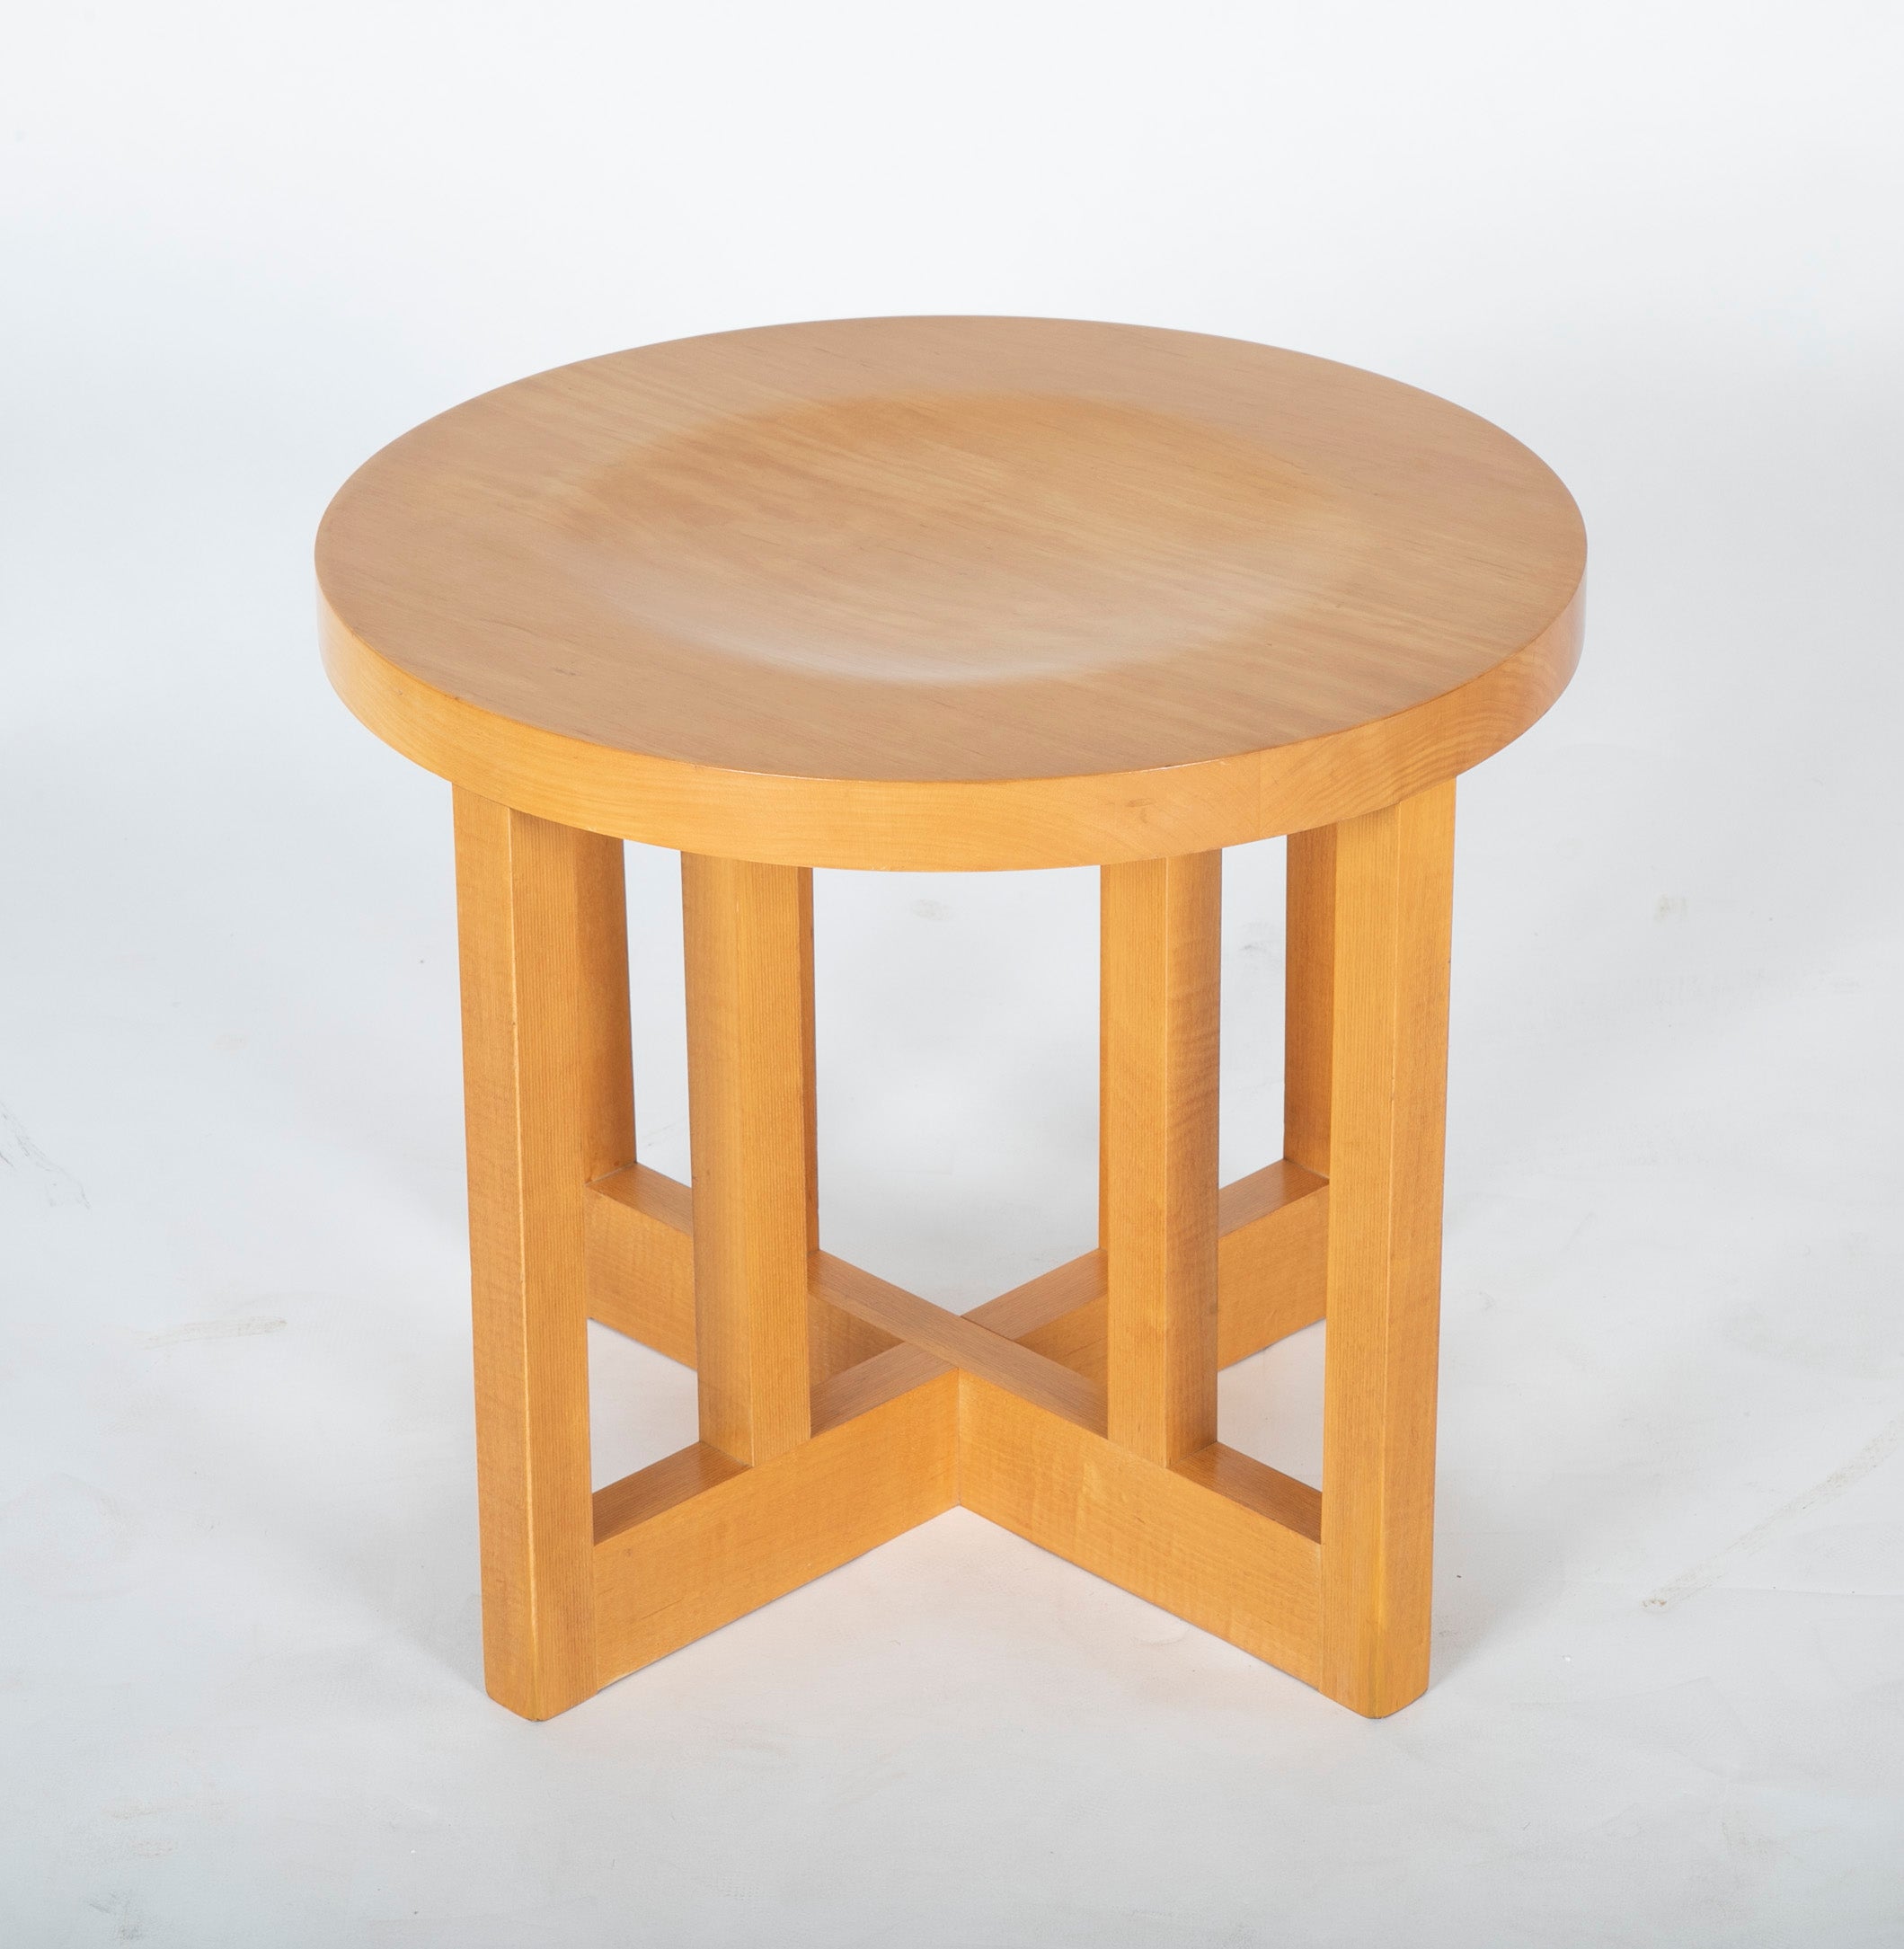 Model 820 Low Side Table or Stool Designed by Richard Meier for Knoll